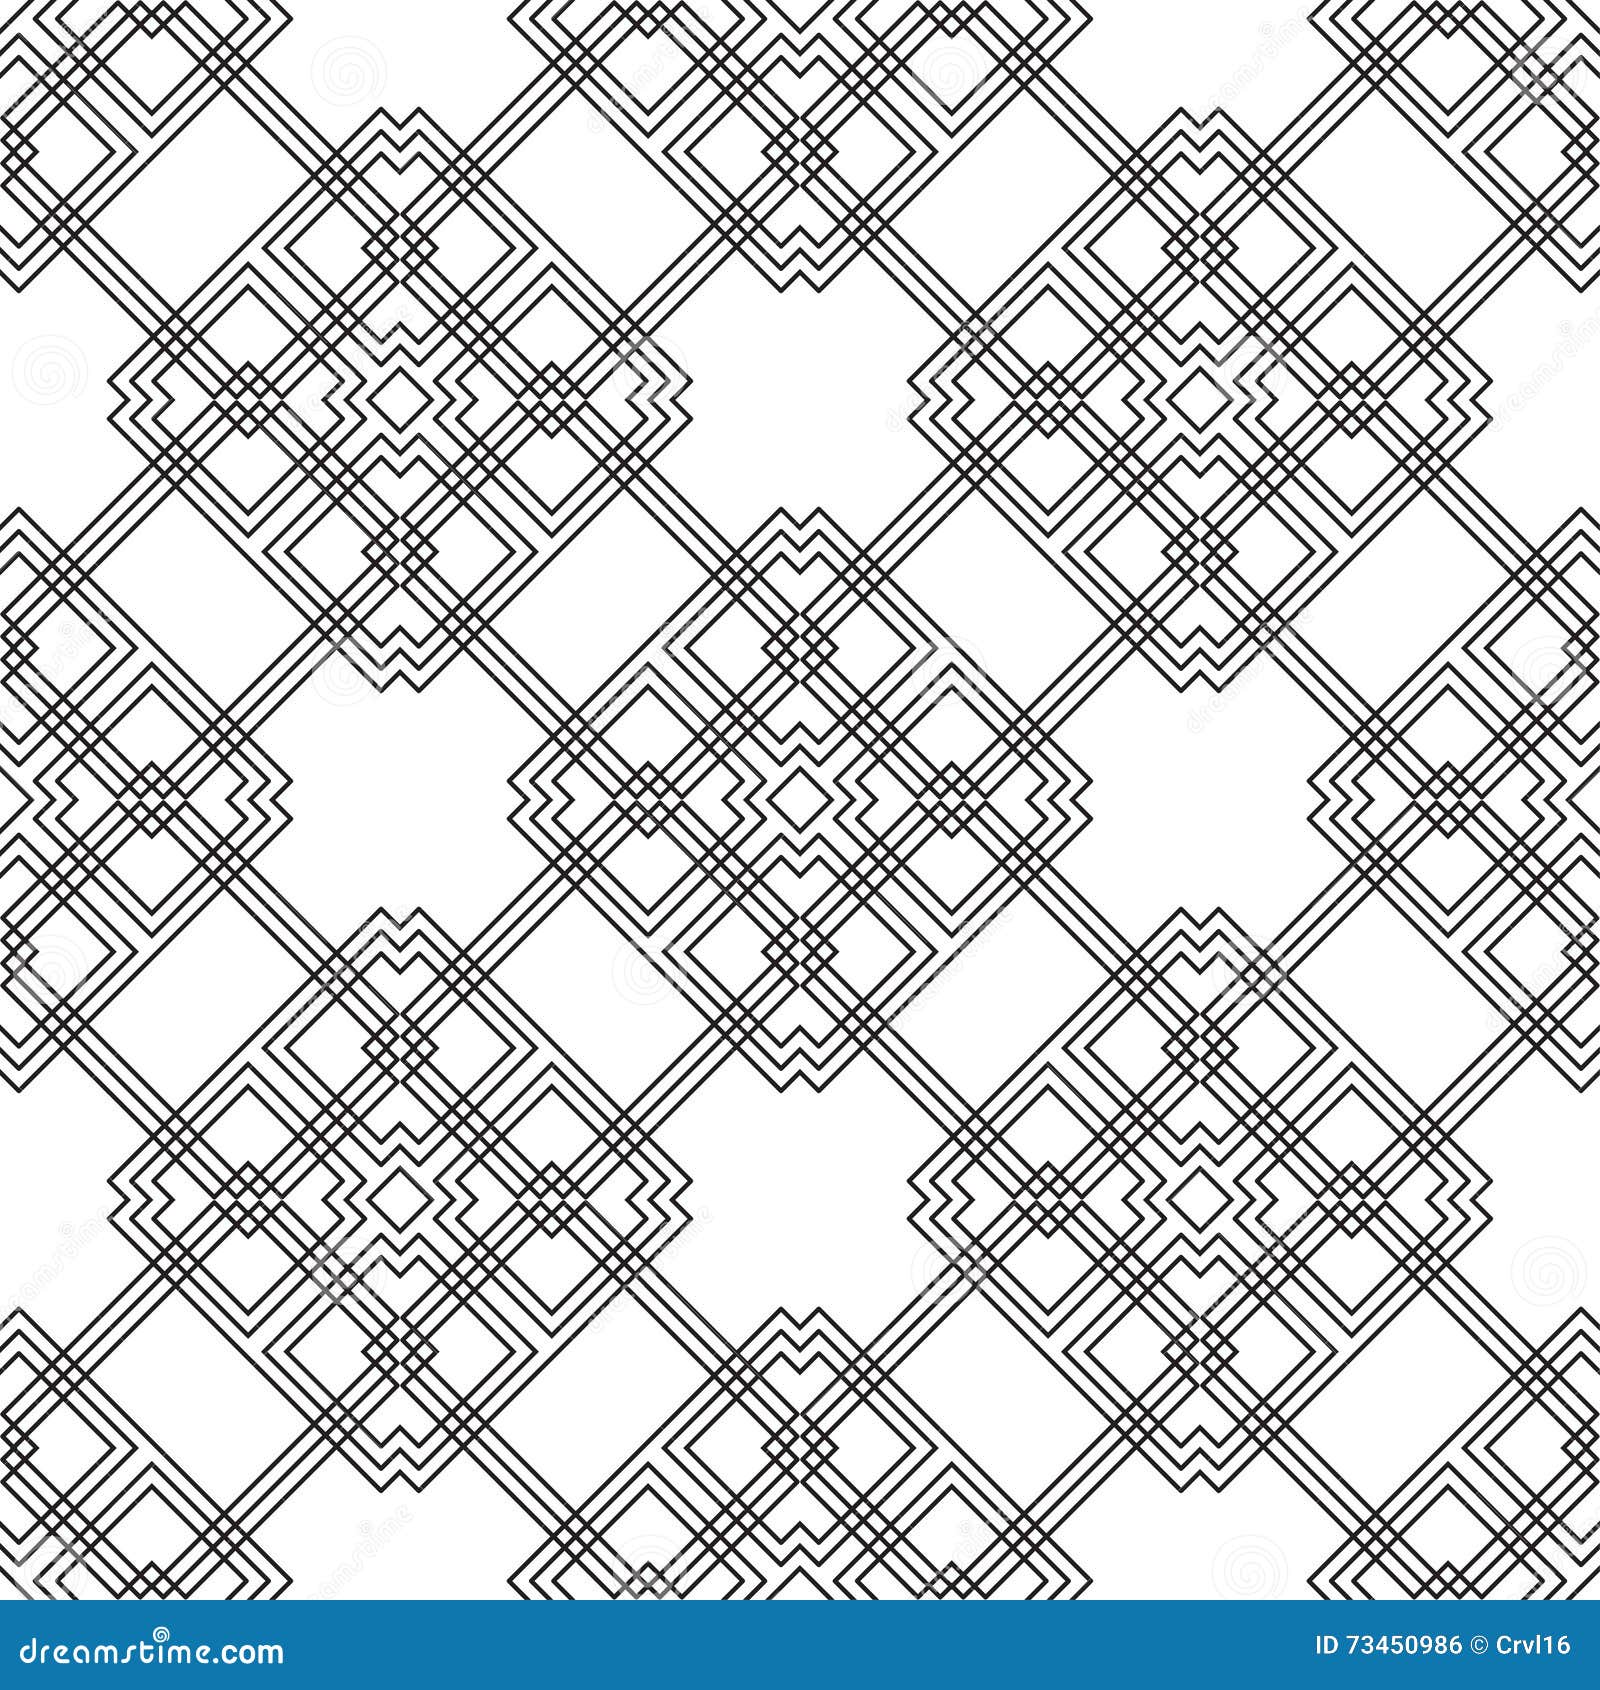 Vector Abstract Seamless Geometric Islamic Wallpaper. Stock Vector ...